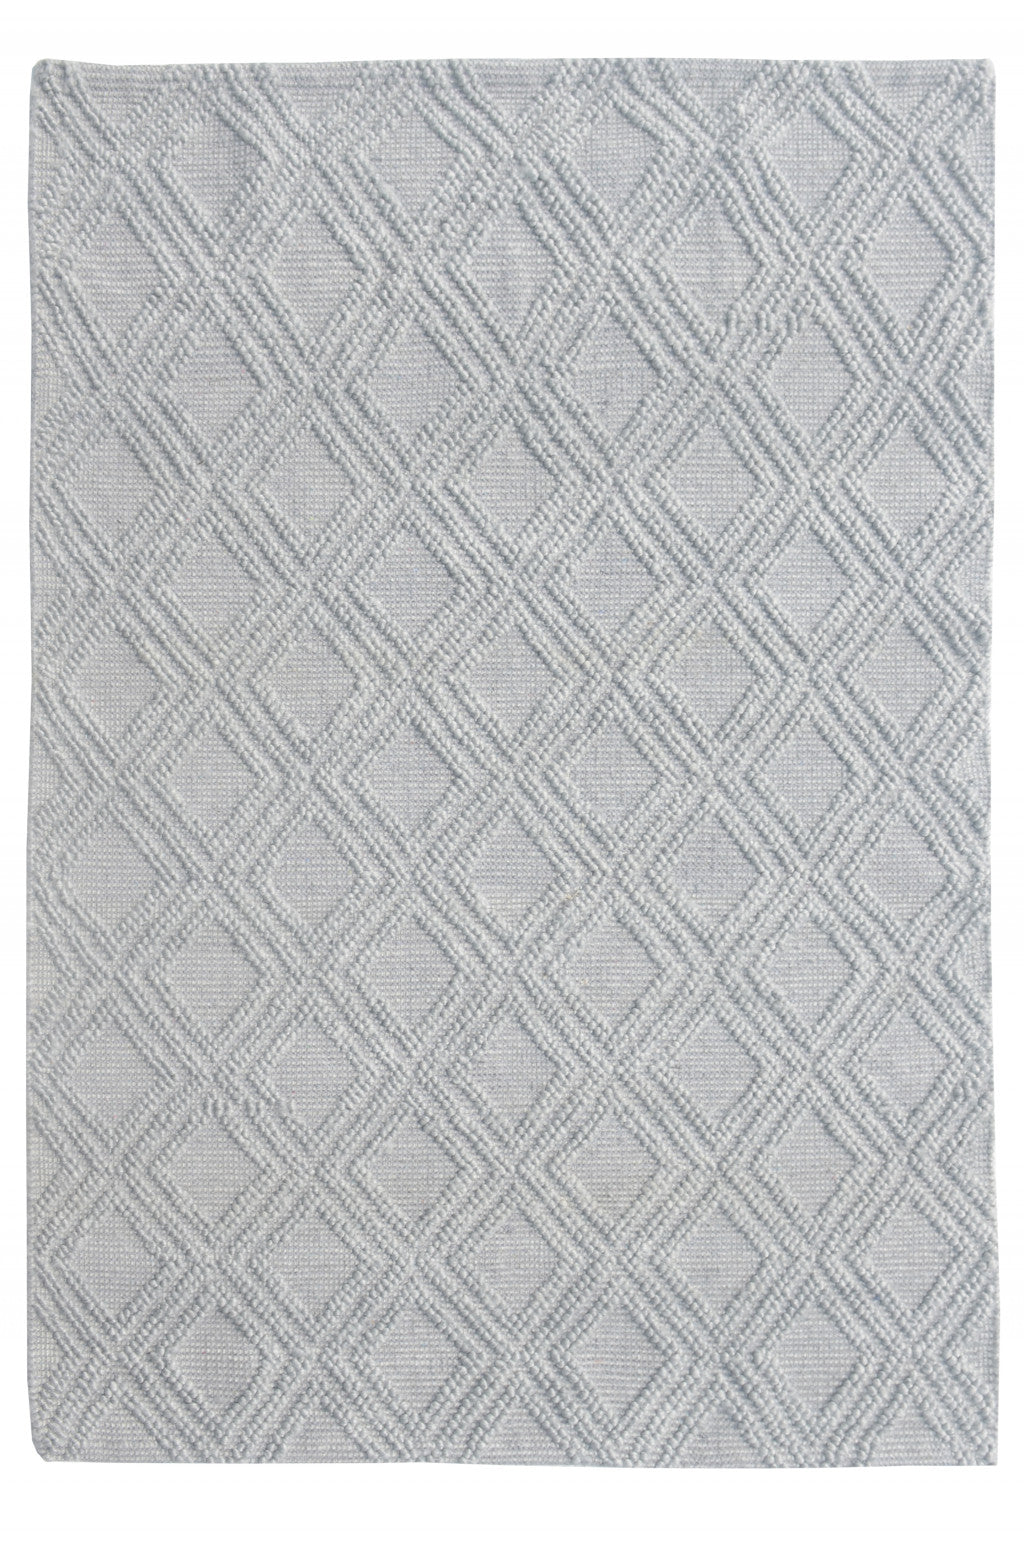 5’ x 7’ Gray Diamond Lattice Modern Area Rug